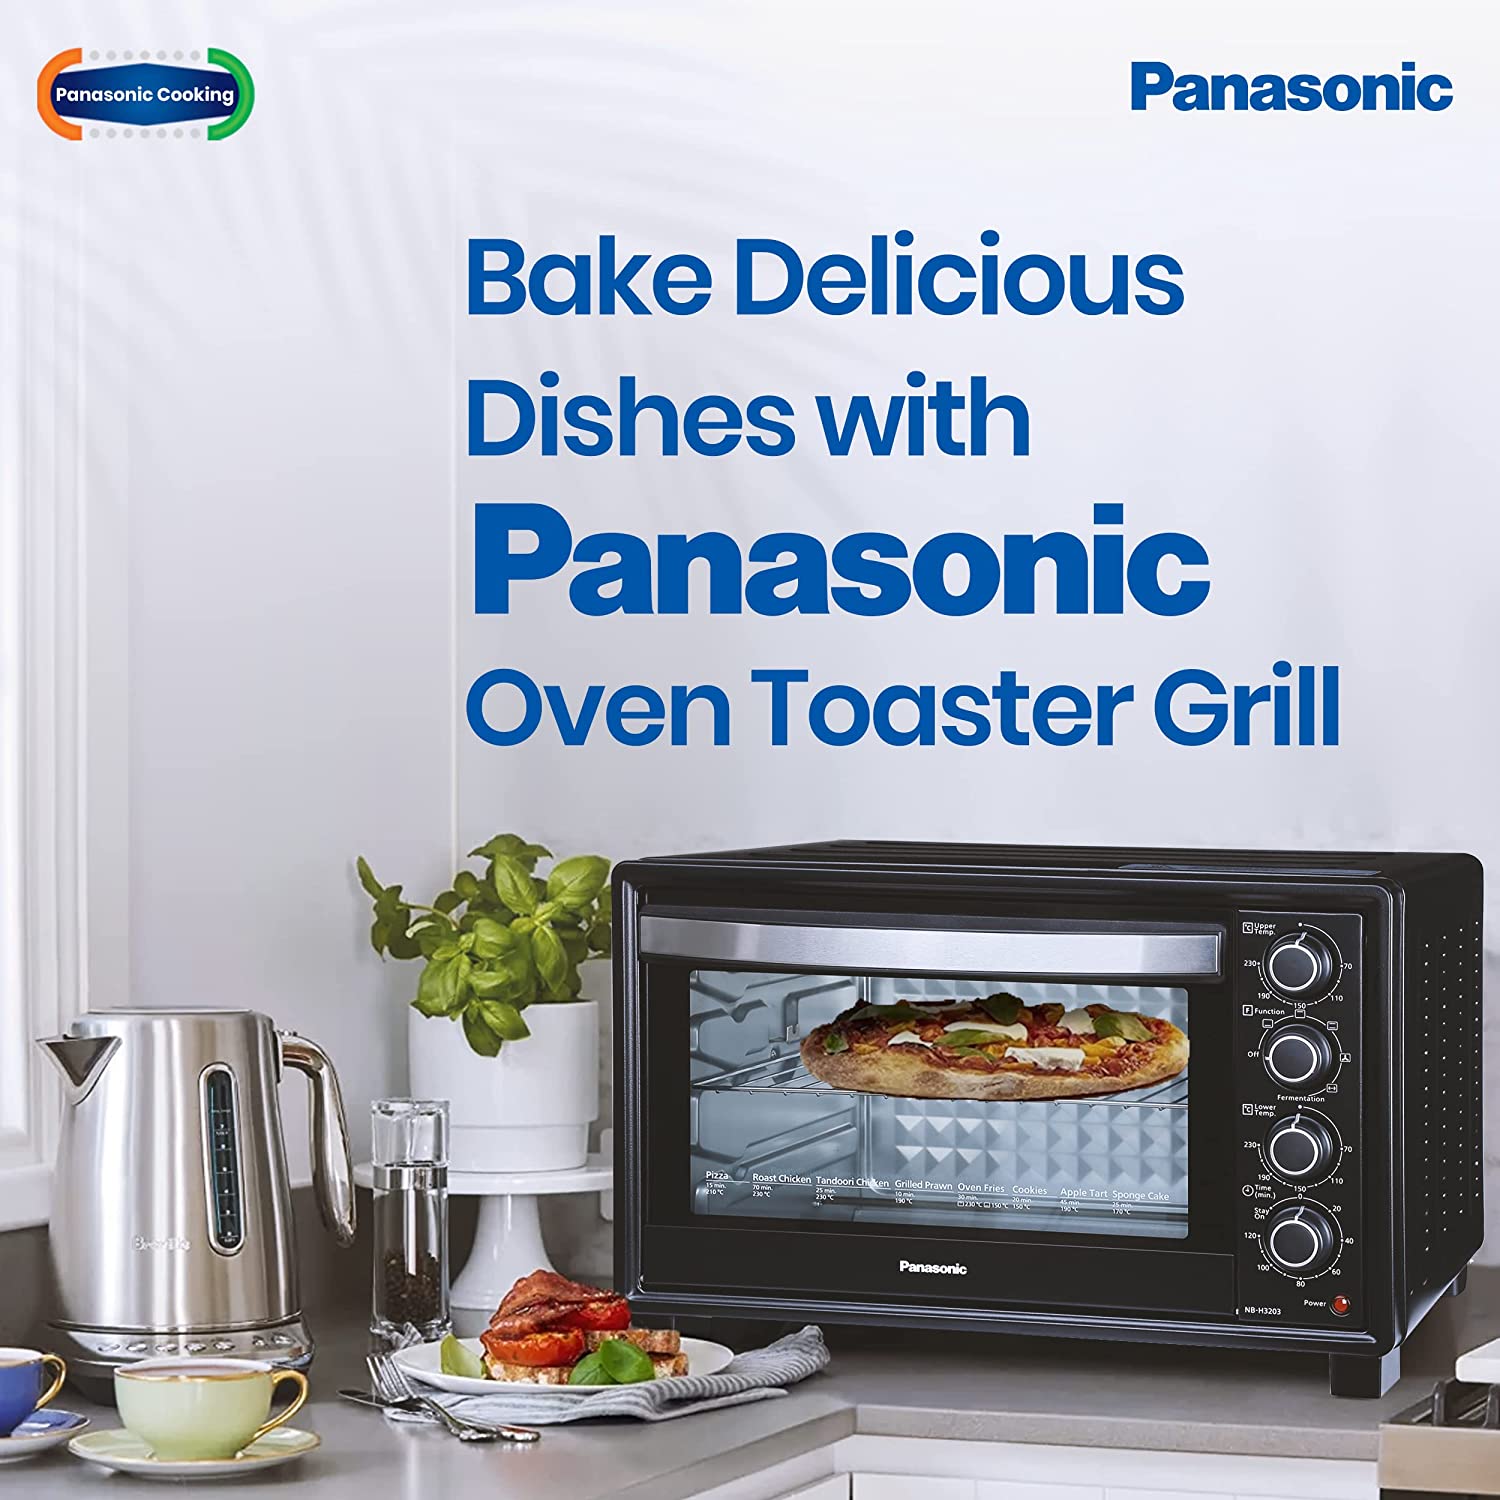 PANASONIC NB-H3203KSM 32 Liter Oven Toaster Grill (Black) - Mahajan Electronics Online